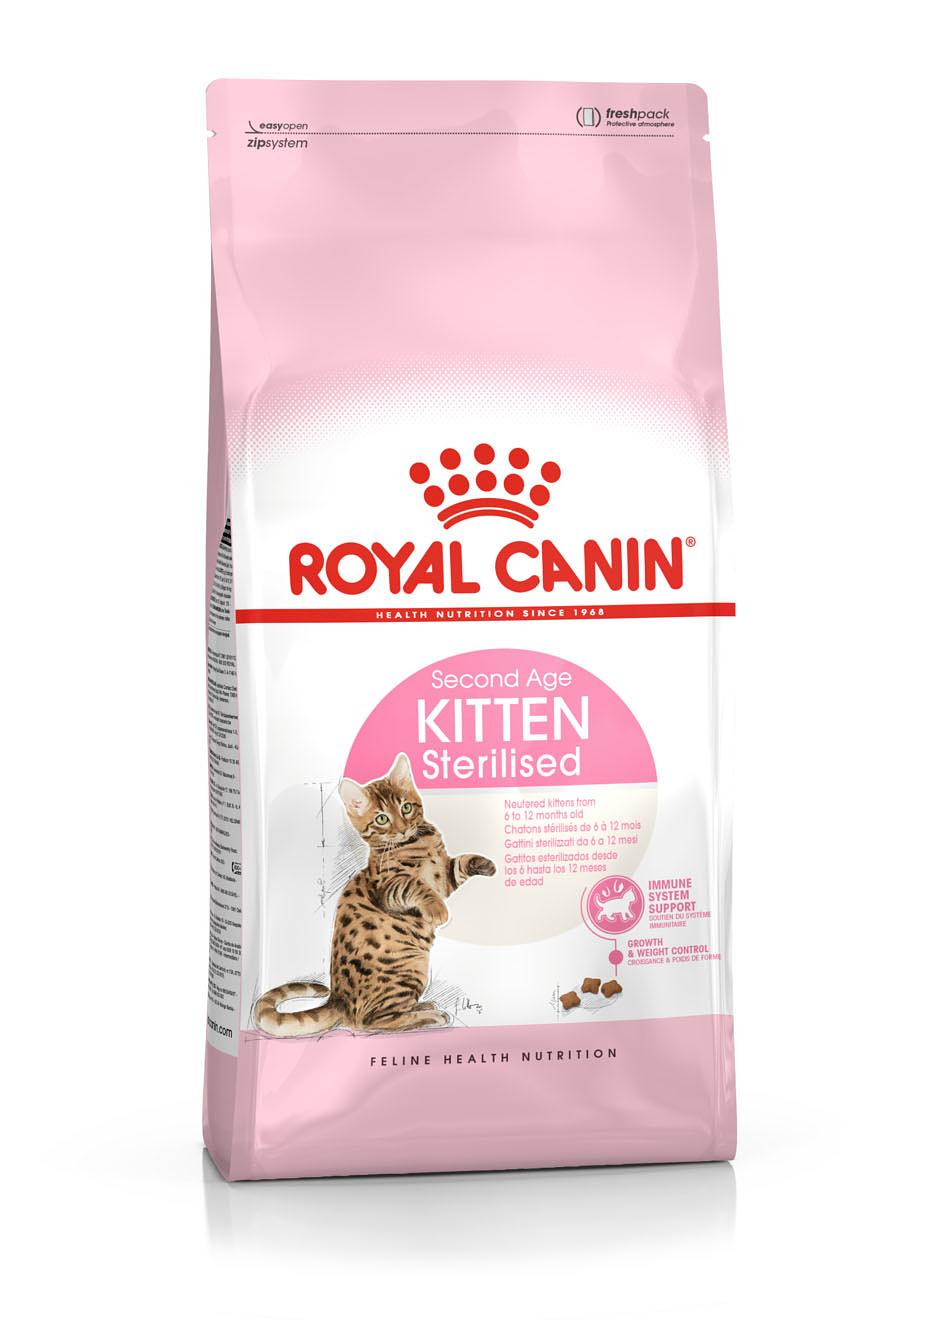 Royal Canin Kitten stérilisé